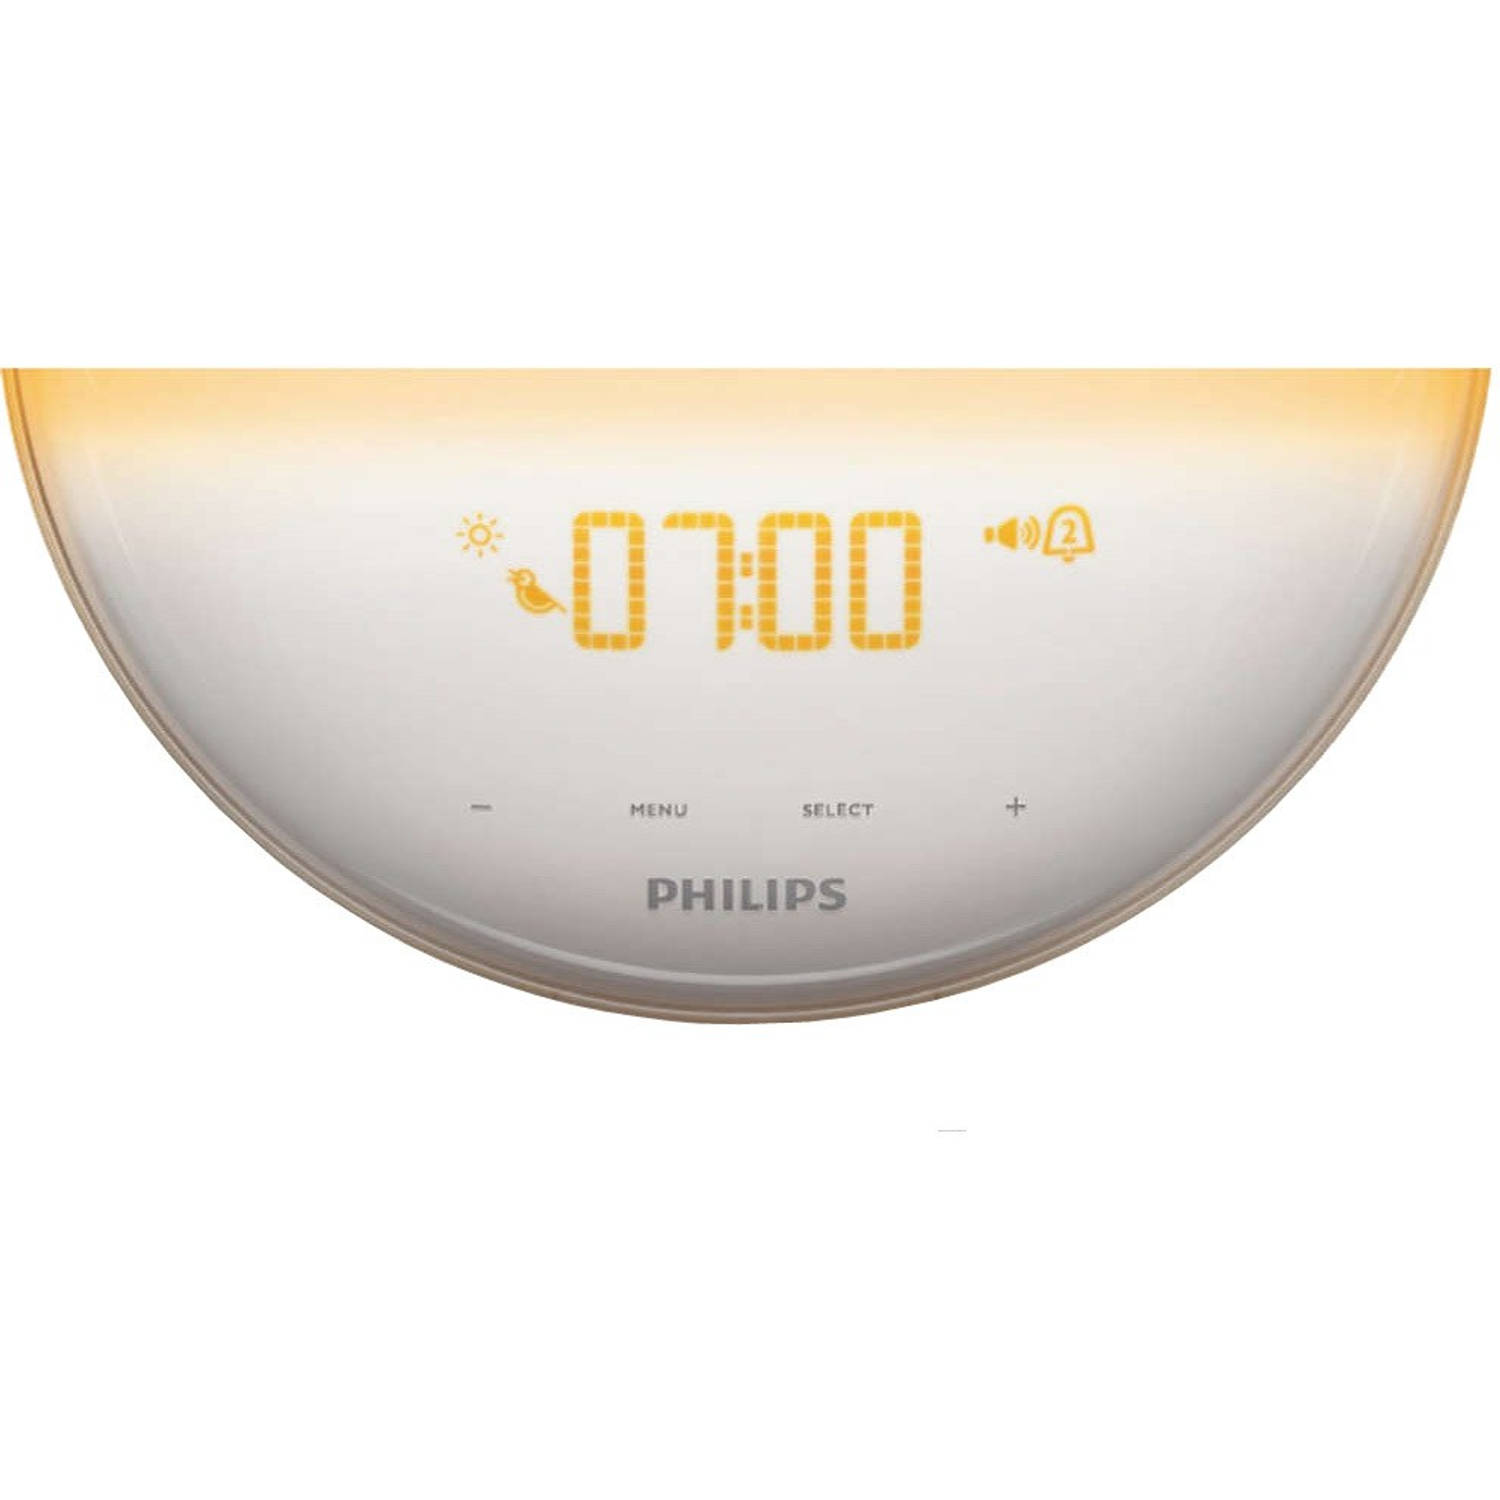 voorjaar wasserette Hectare Philips Wake-up Light HF3532/01 - wit | Blokker